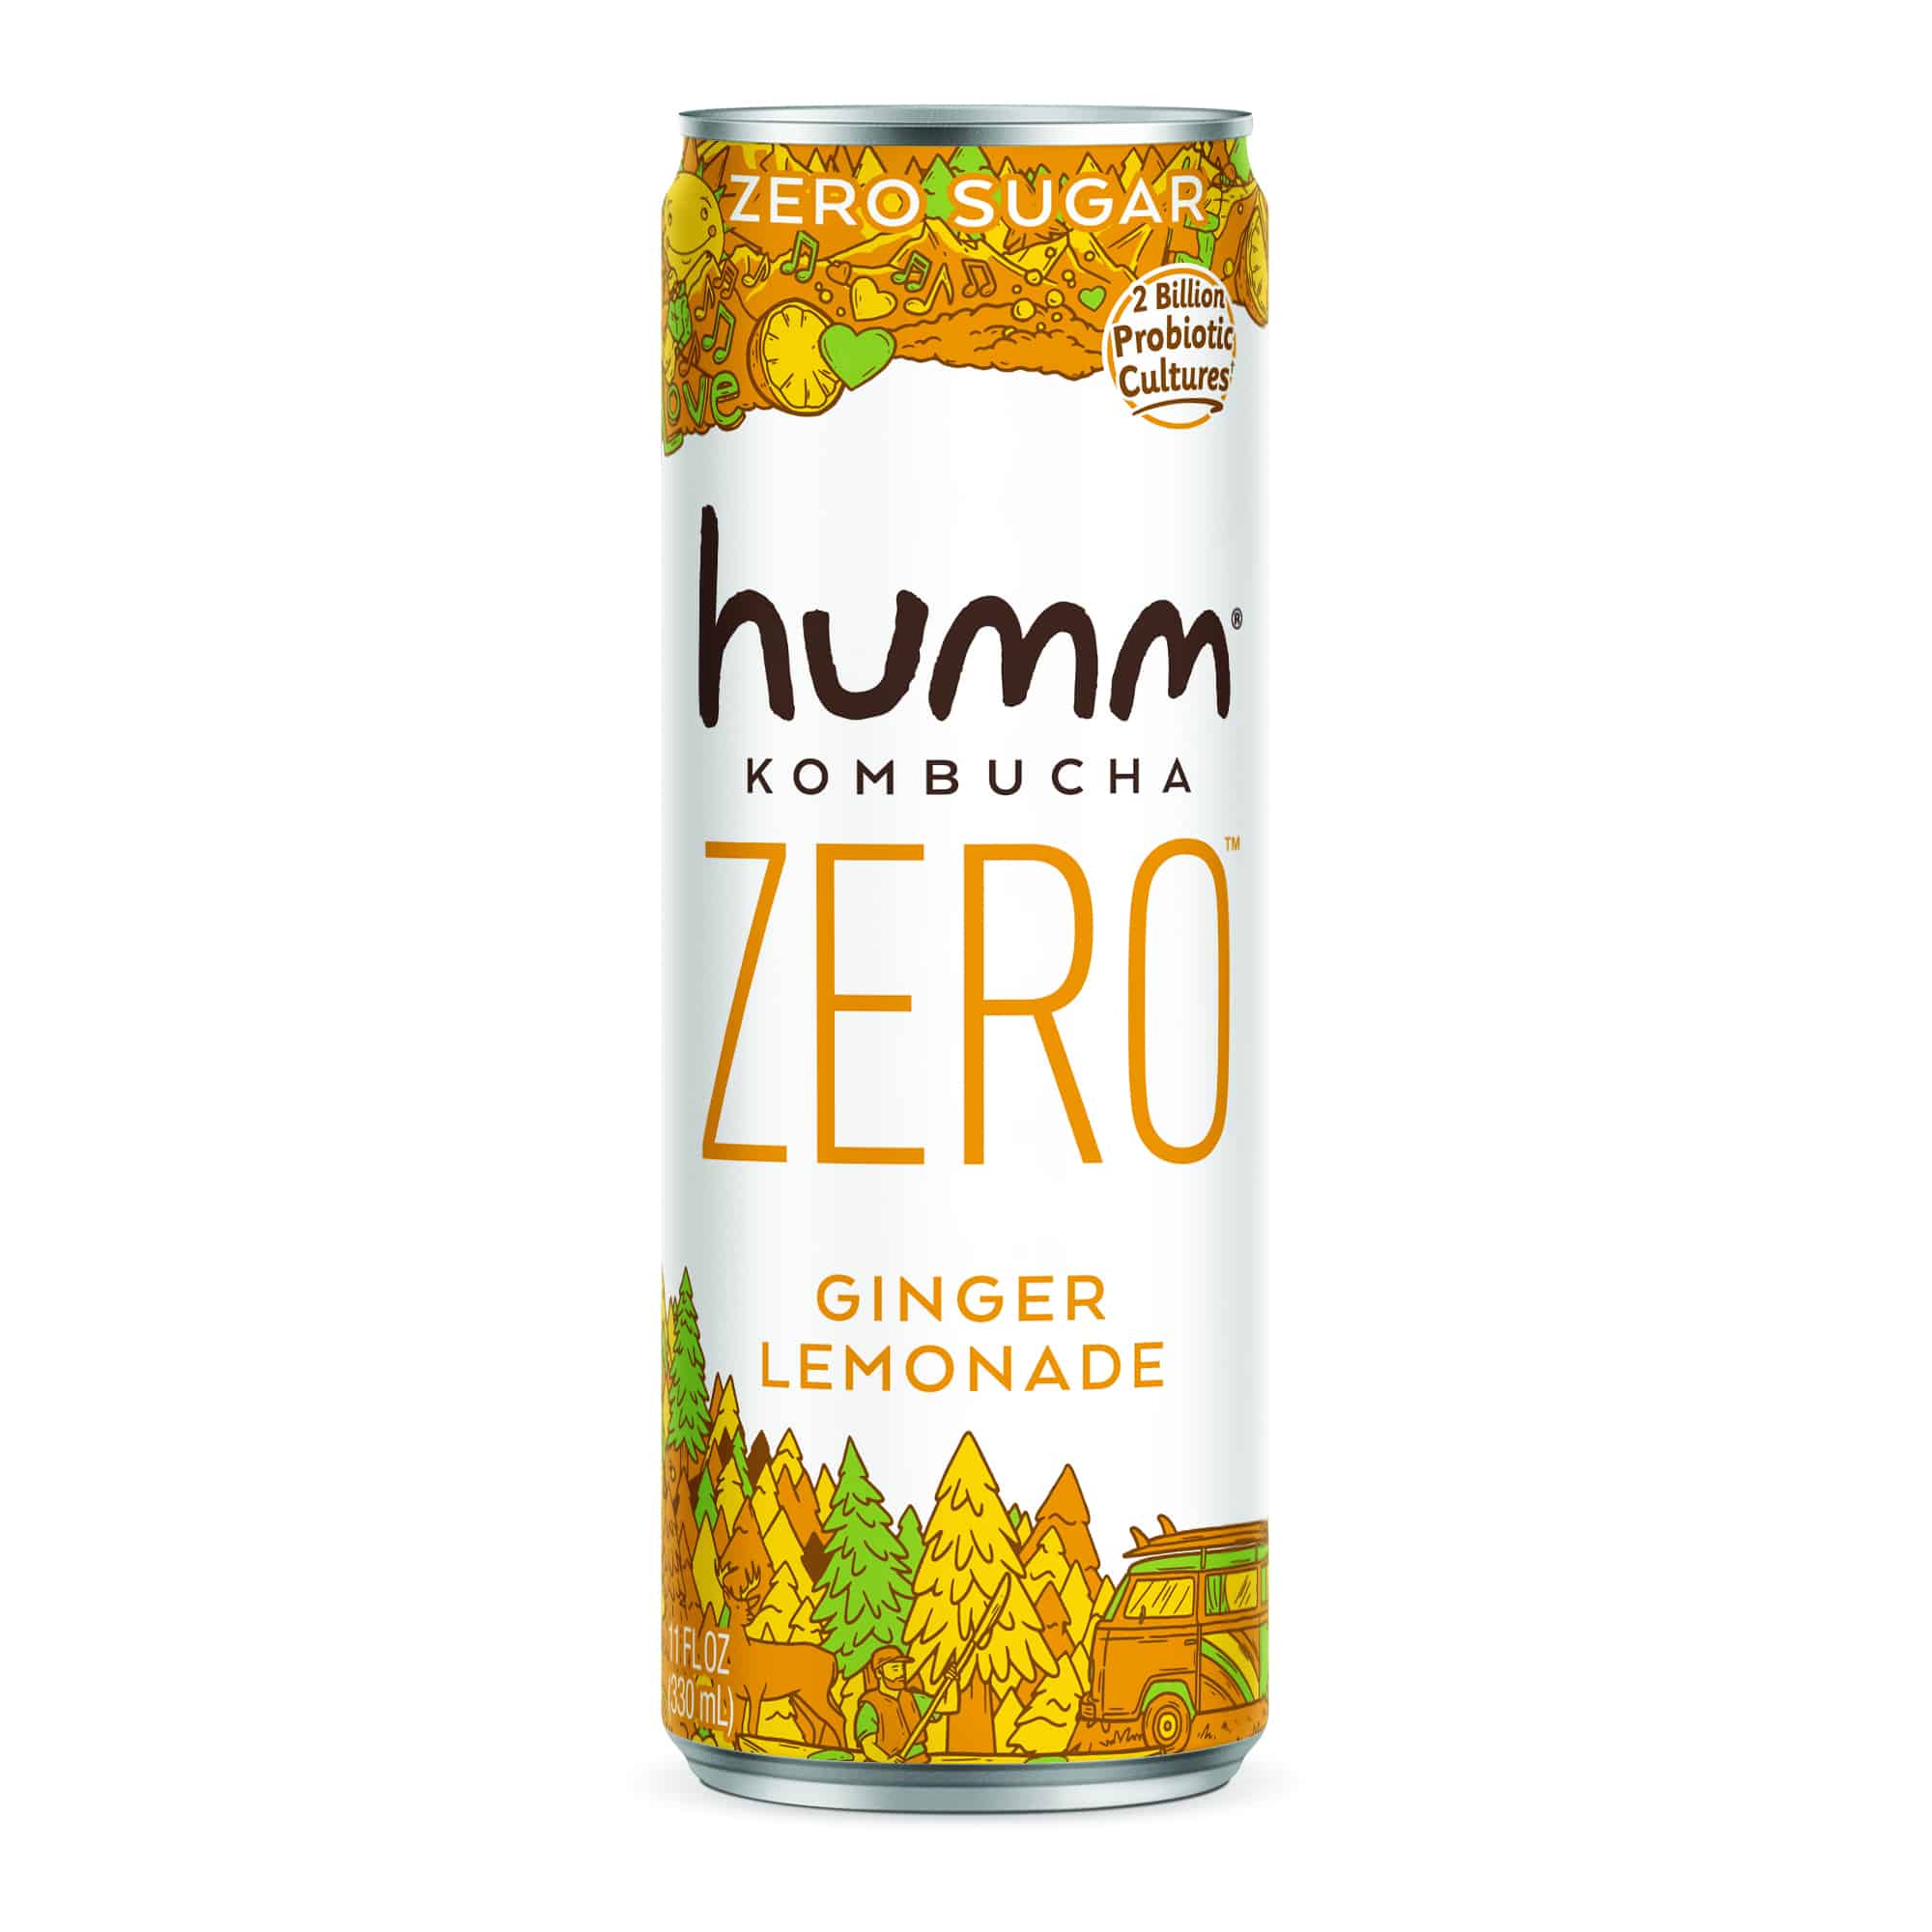 Humm Kombucha Zero Ginger Lemonade 12 units per case 11.0 fl